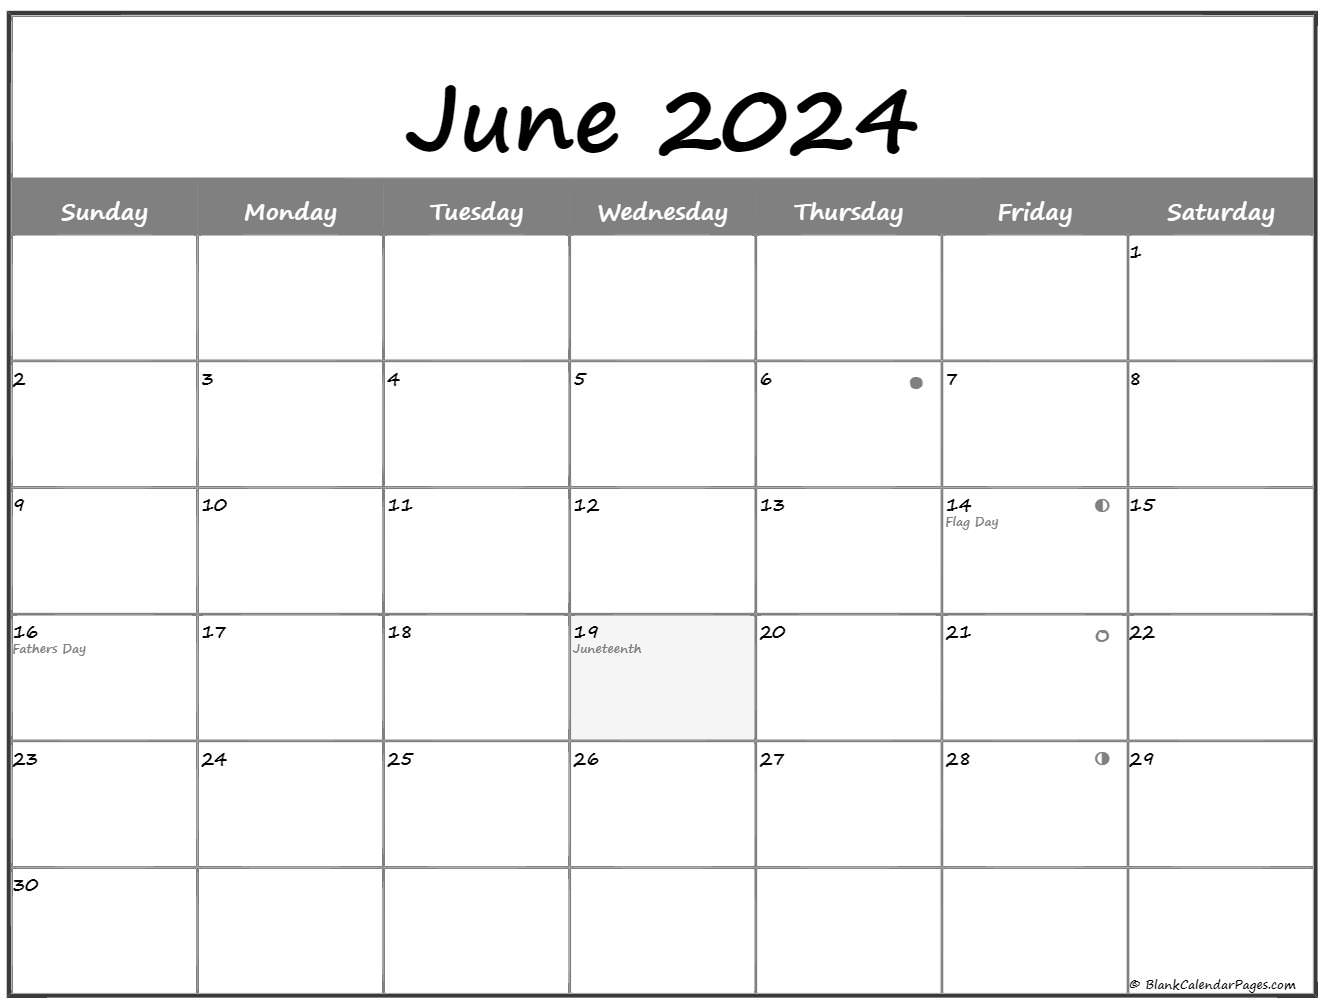 June 2021 Lunar Calendar | Moon Phase Calendar